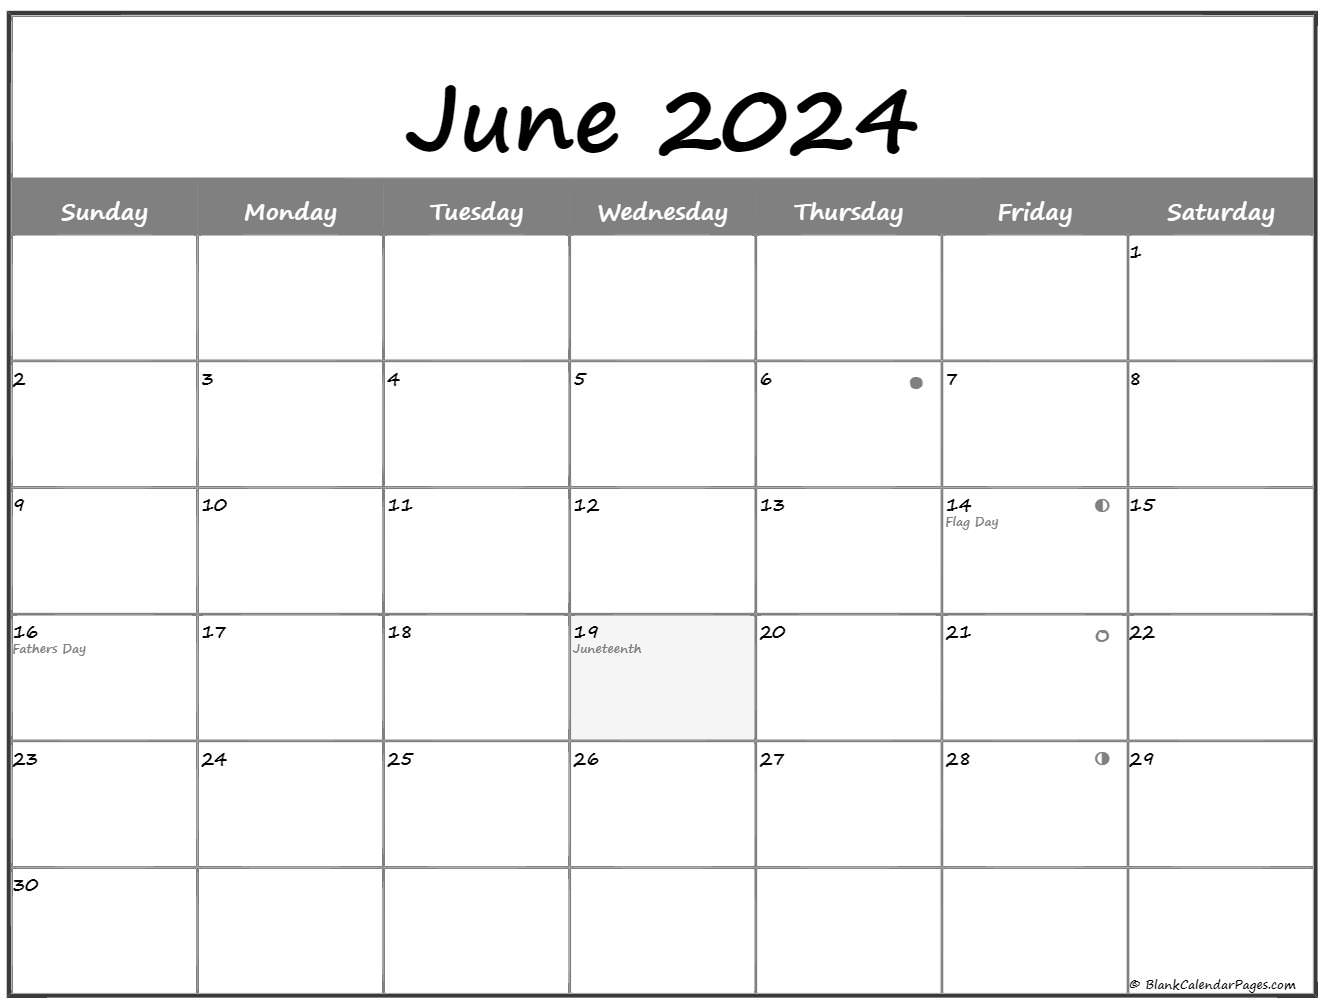 June 2021 Lunar Calendar | Moon Phase Calendar